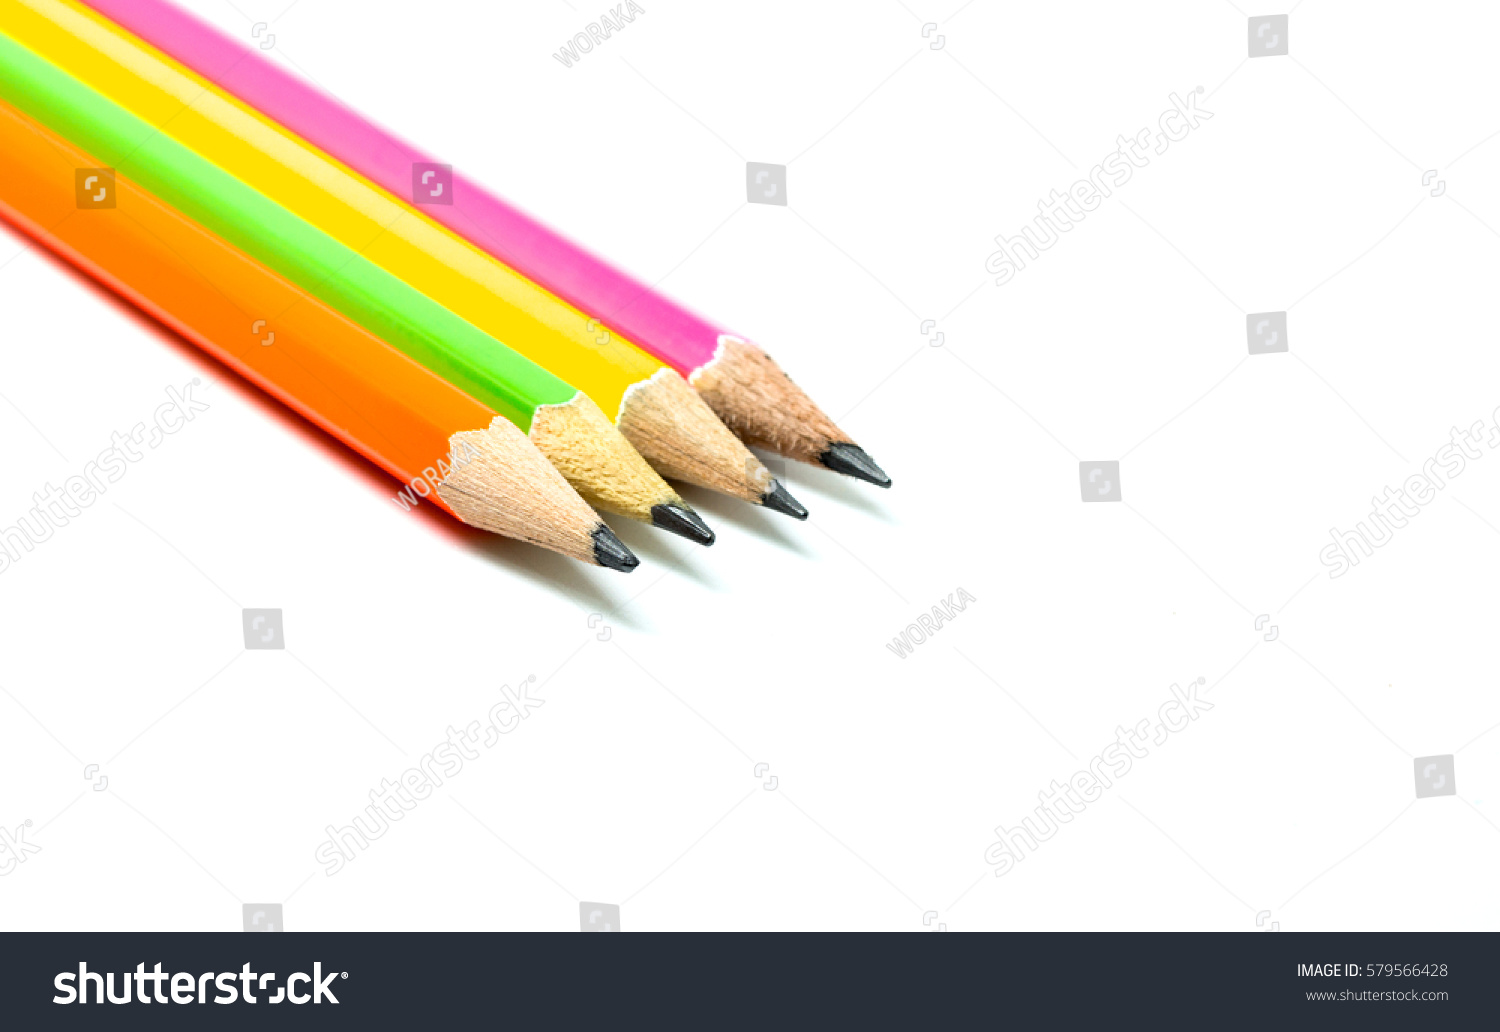 Miles Smiles Tip Topz Pencils Pack of 24 